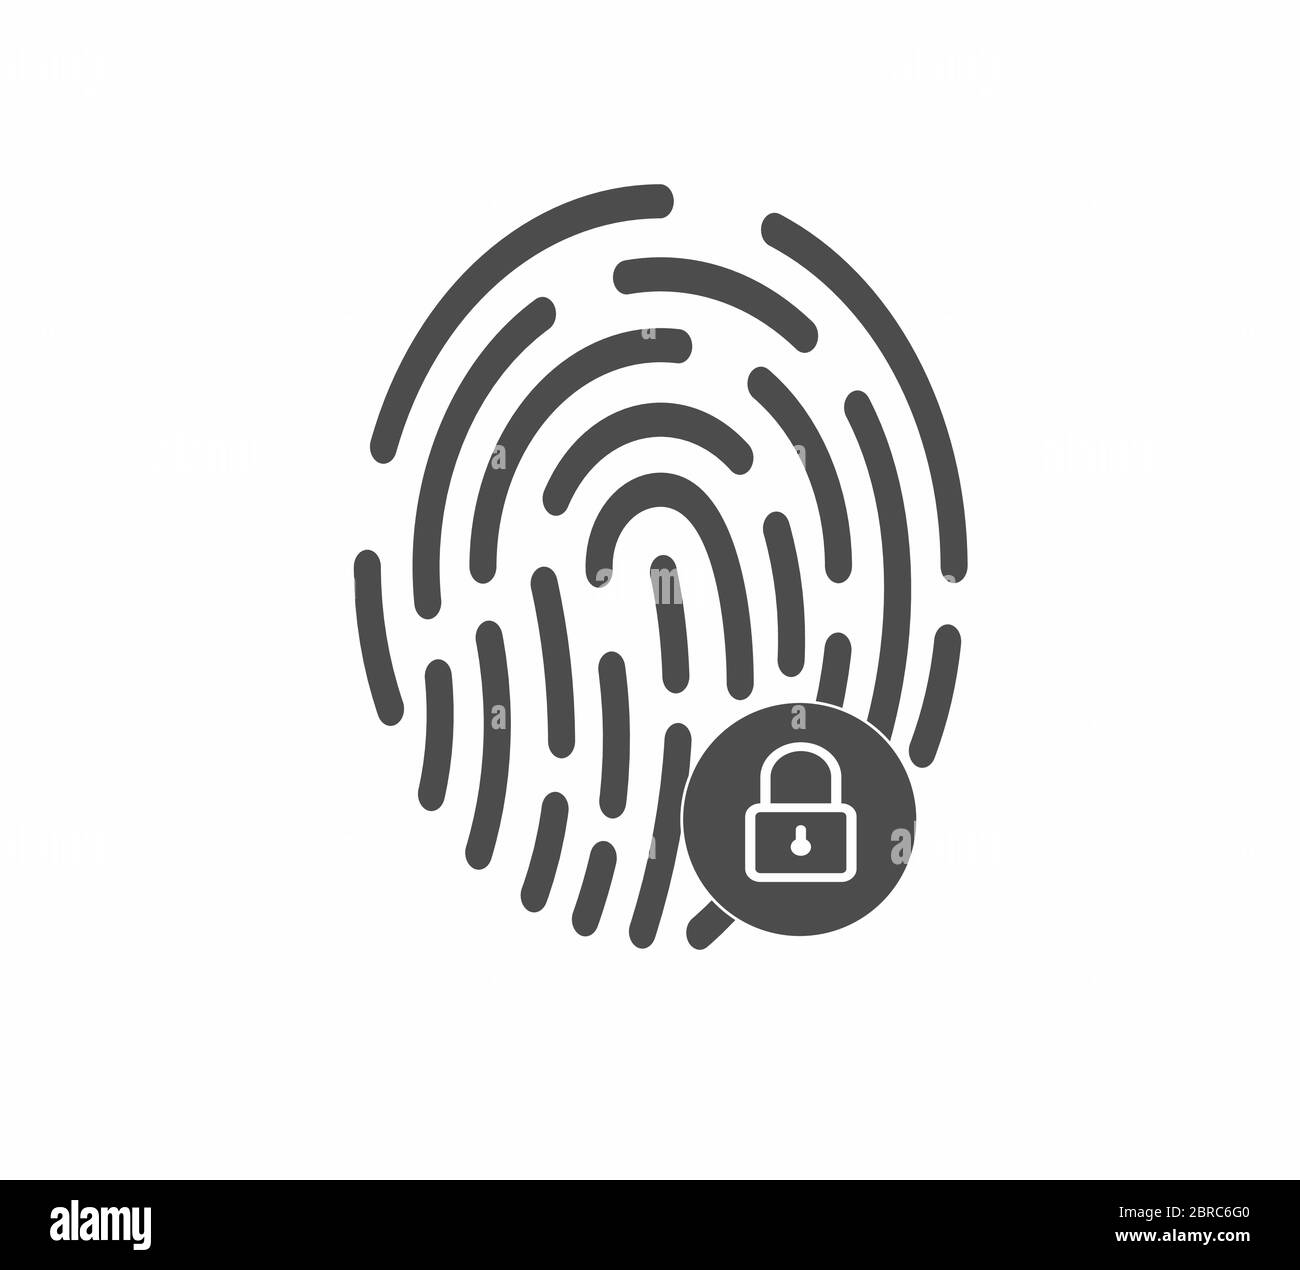 Fingerprint - Identification and Data Security Stock Vector